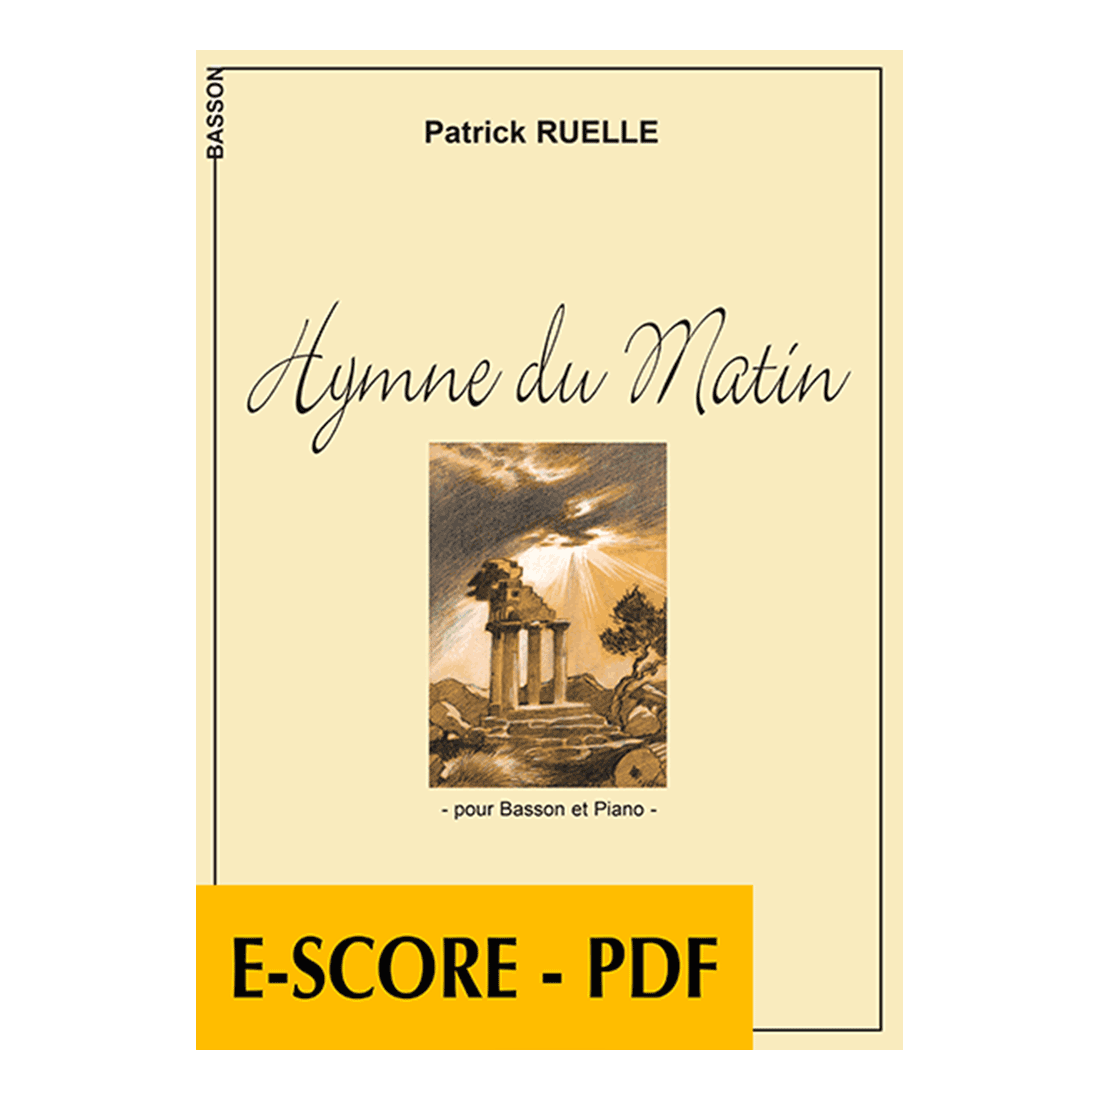 Hymne du matin pour basson et piano - E-score PDF